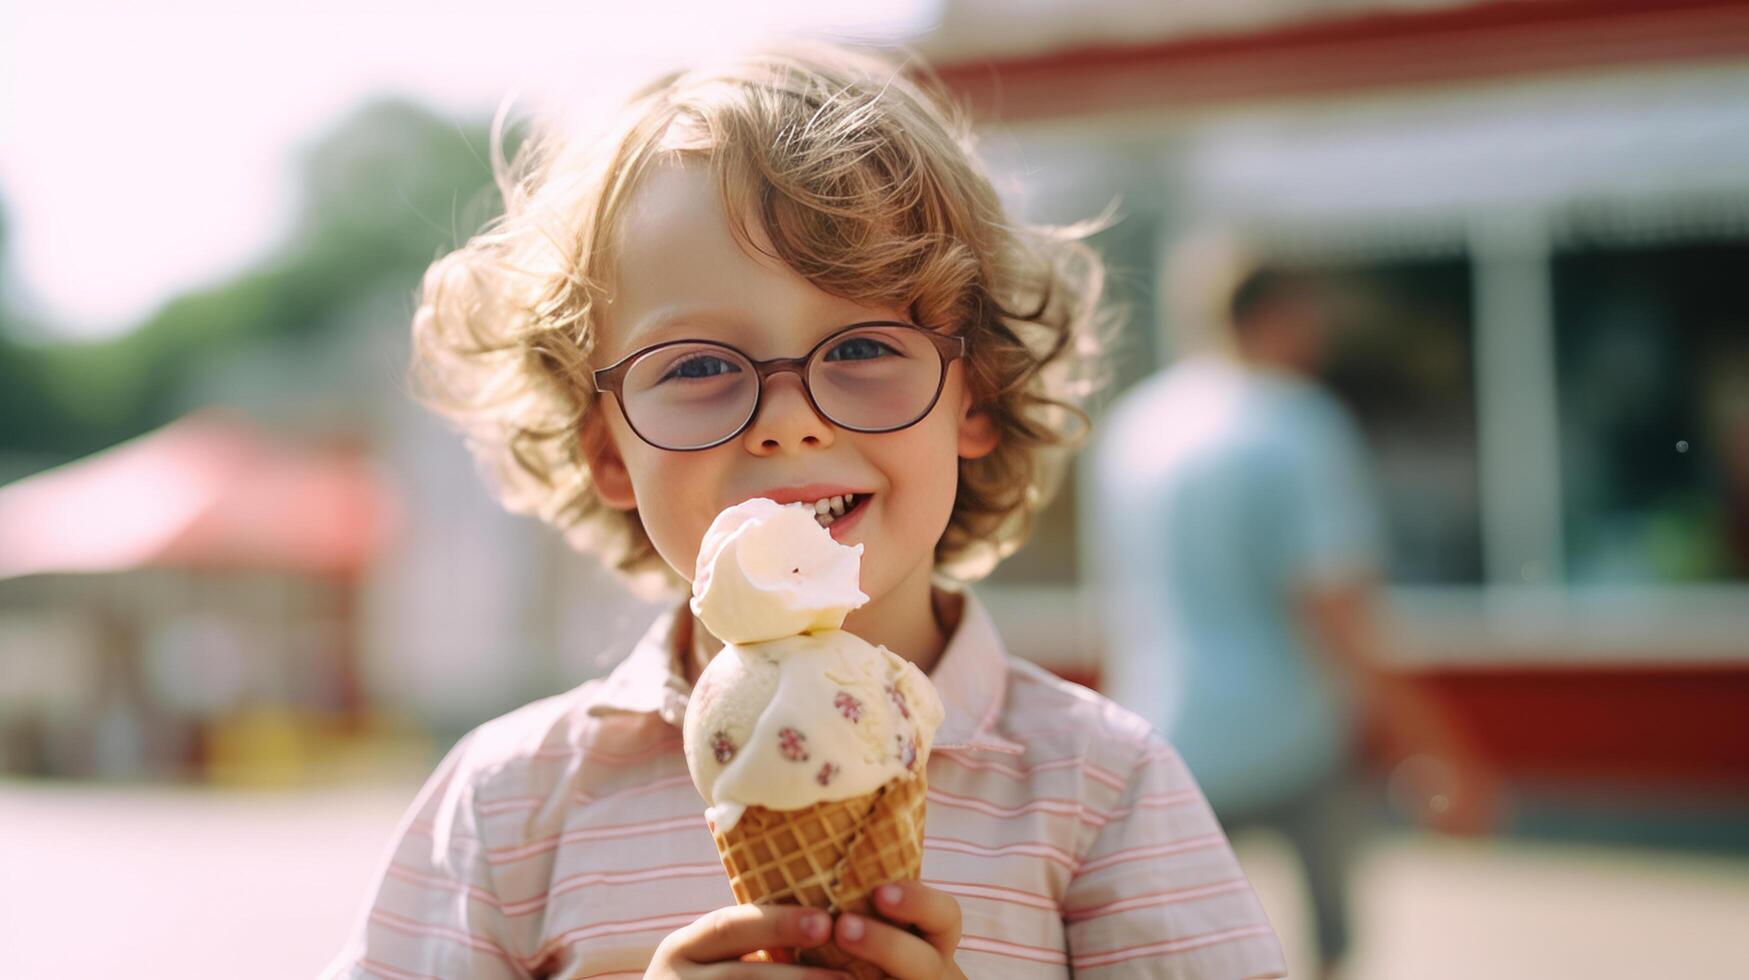 Child eats ice cream. Illustration photo